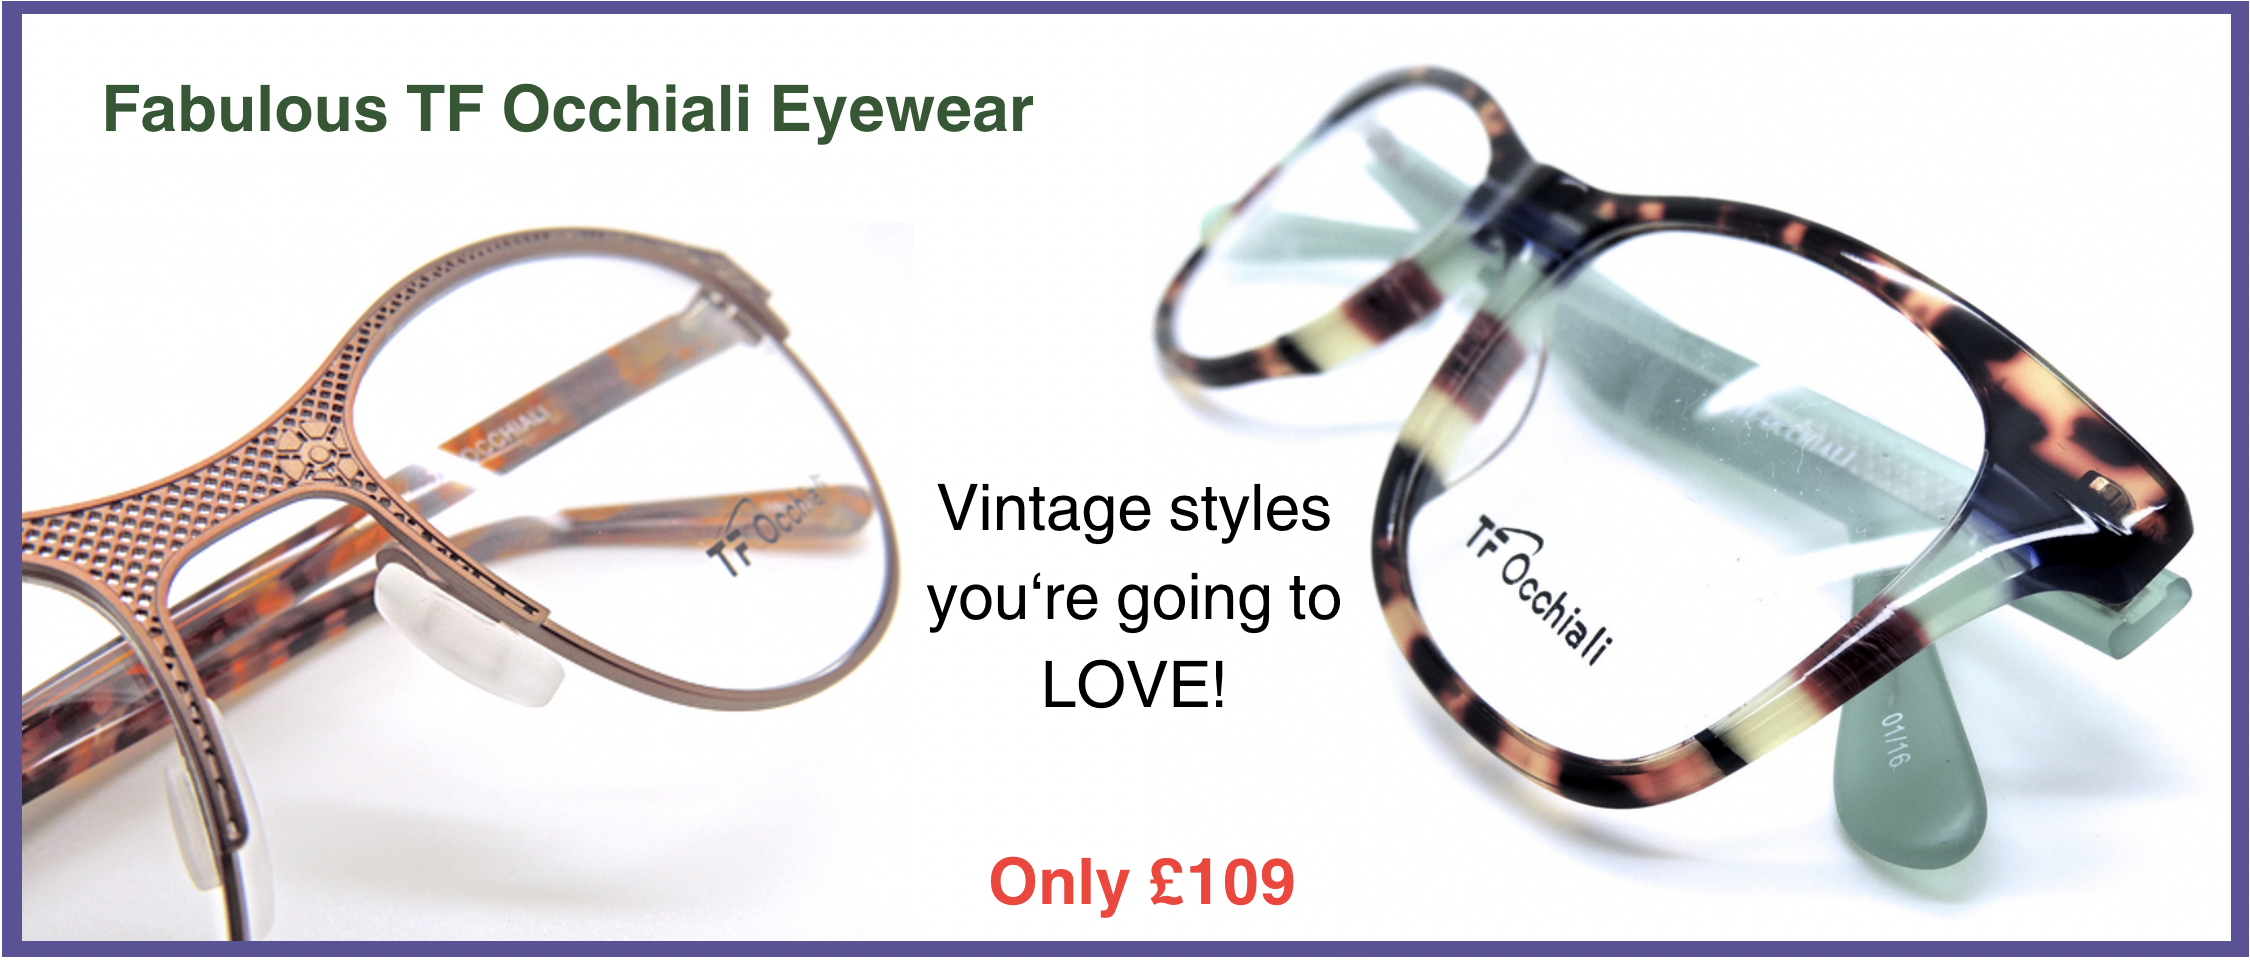 Colourful vintage TF Occhiali eyewear in varying styles at Eyehuggers